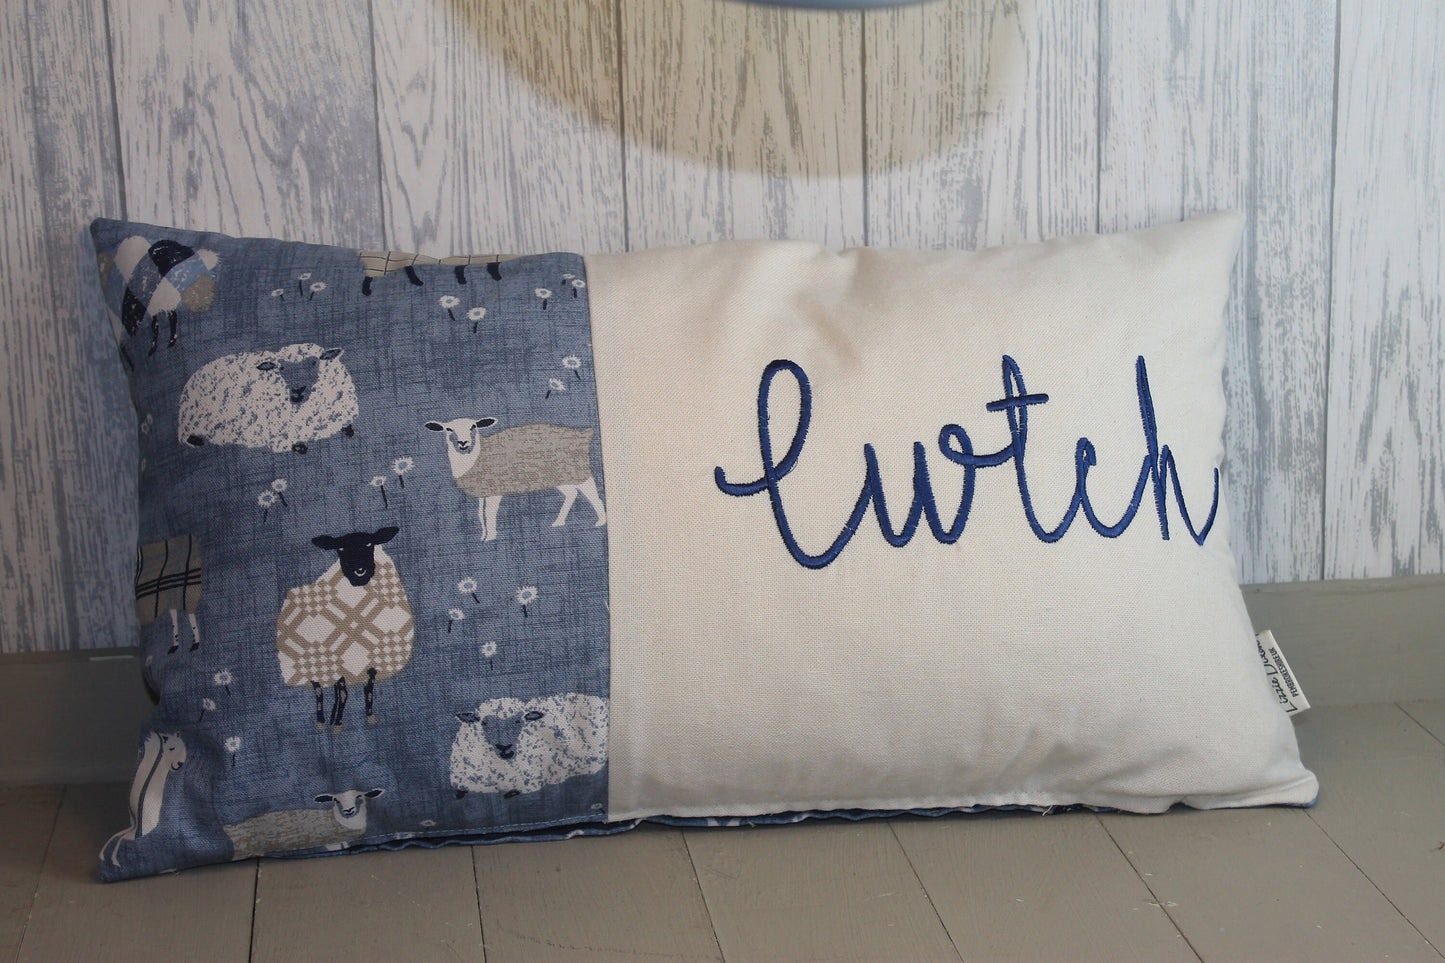 Sheep wearing jumpers-Cwtch Cushion Navy Blue sheep jumper cushion- 20x12" Cushion Cover -Decorative cushion -Throw cushion